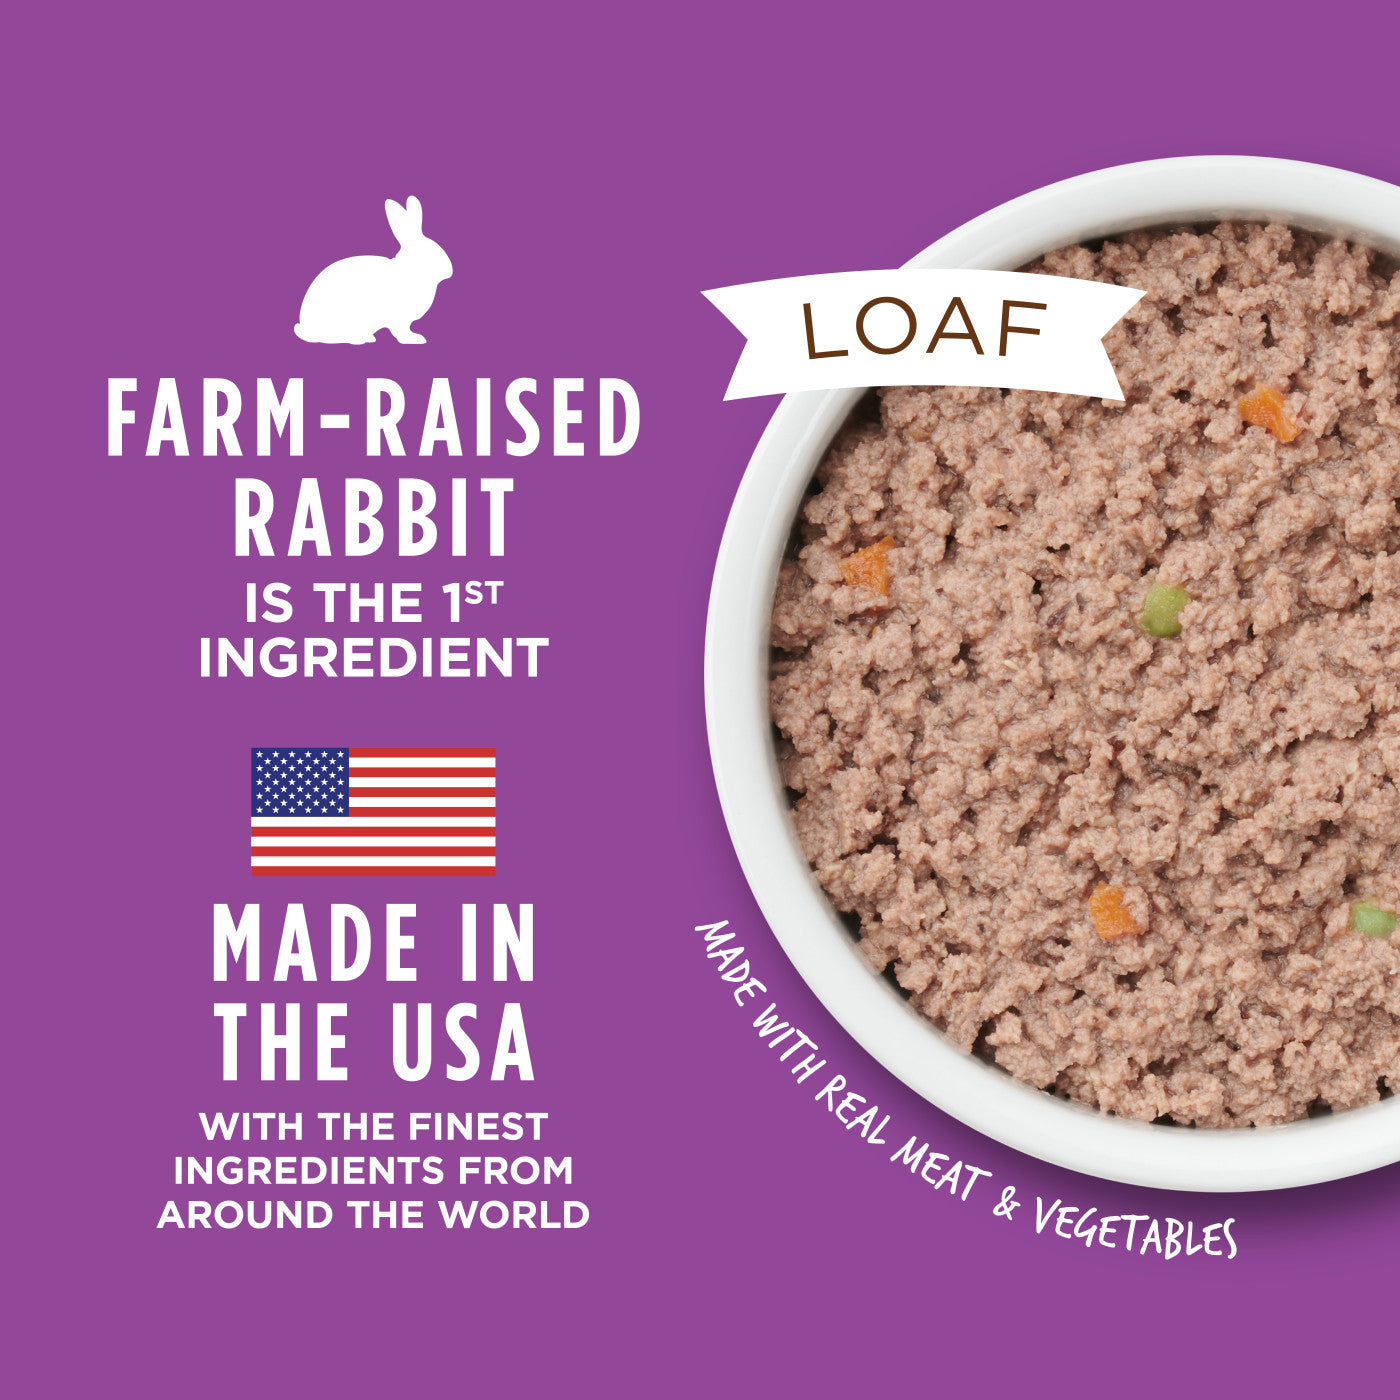 Instinct Wet Dog Food Original Real Rabbit Recipe  Canned Dog Food  | PetMax Canada